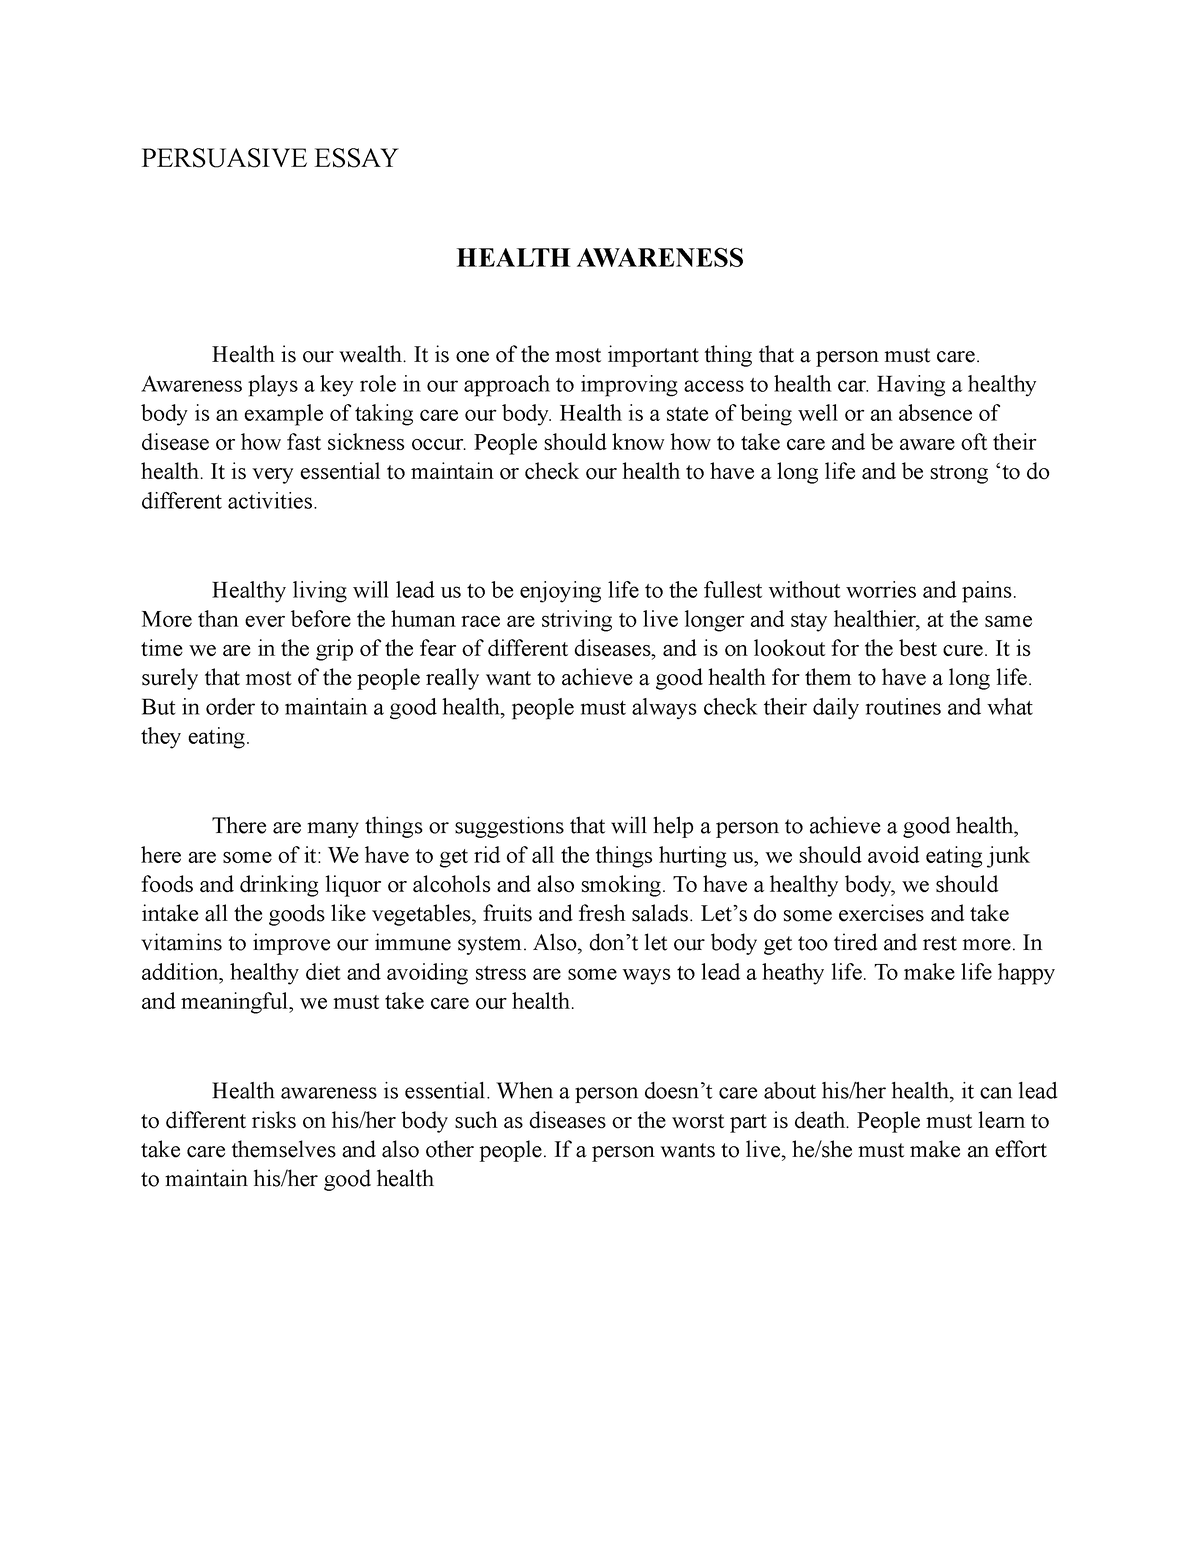 physical health awareness essay